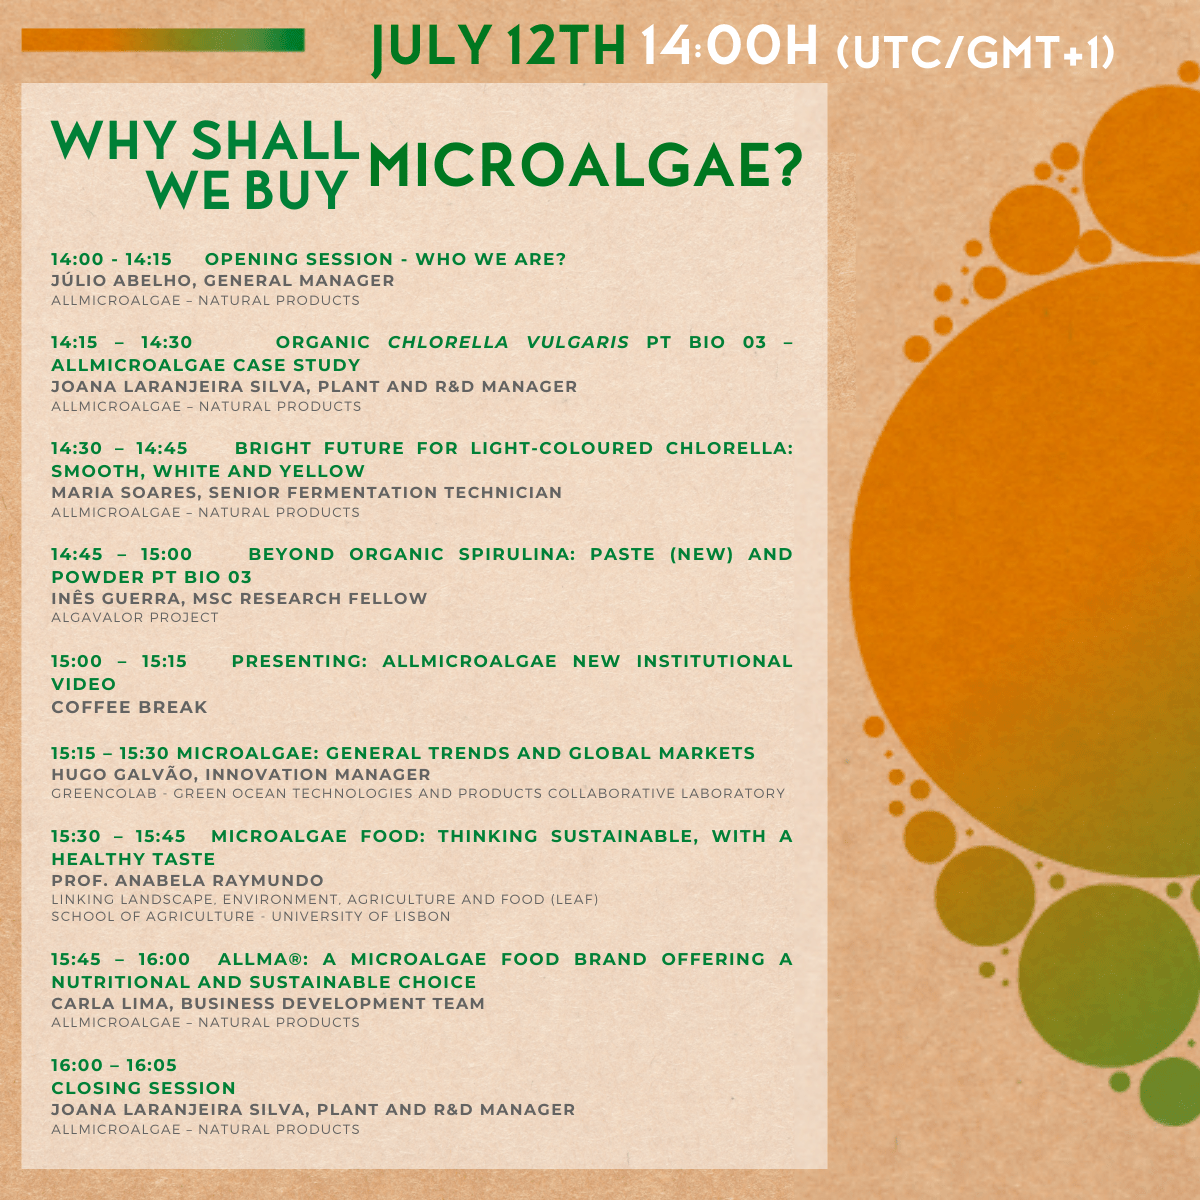 Allmicroalgae organized on July 12th an open international webinar: “Why shall we buy microalgae?”